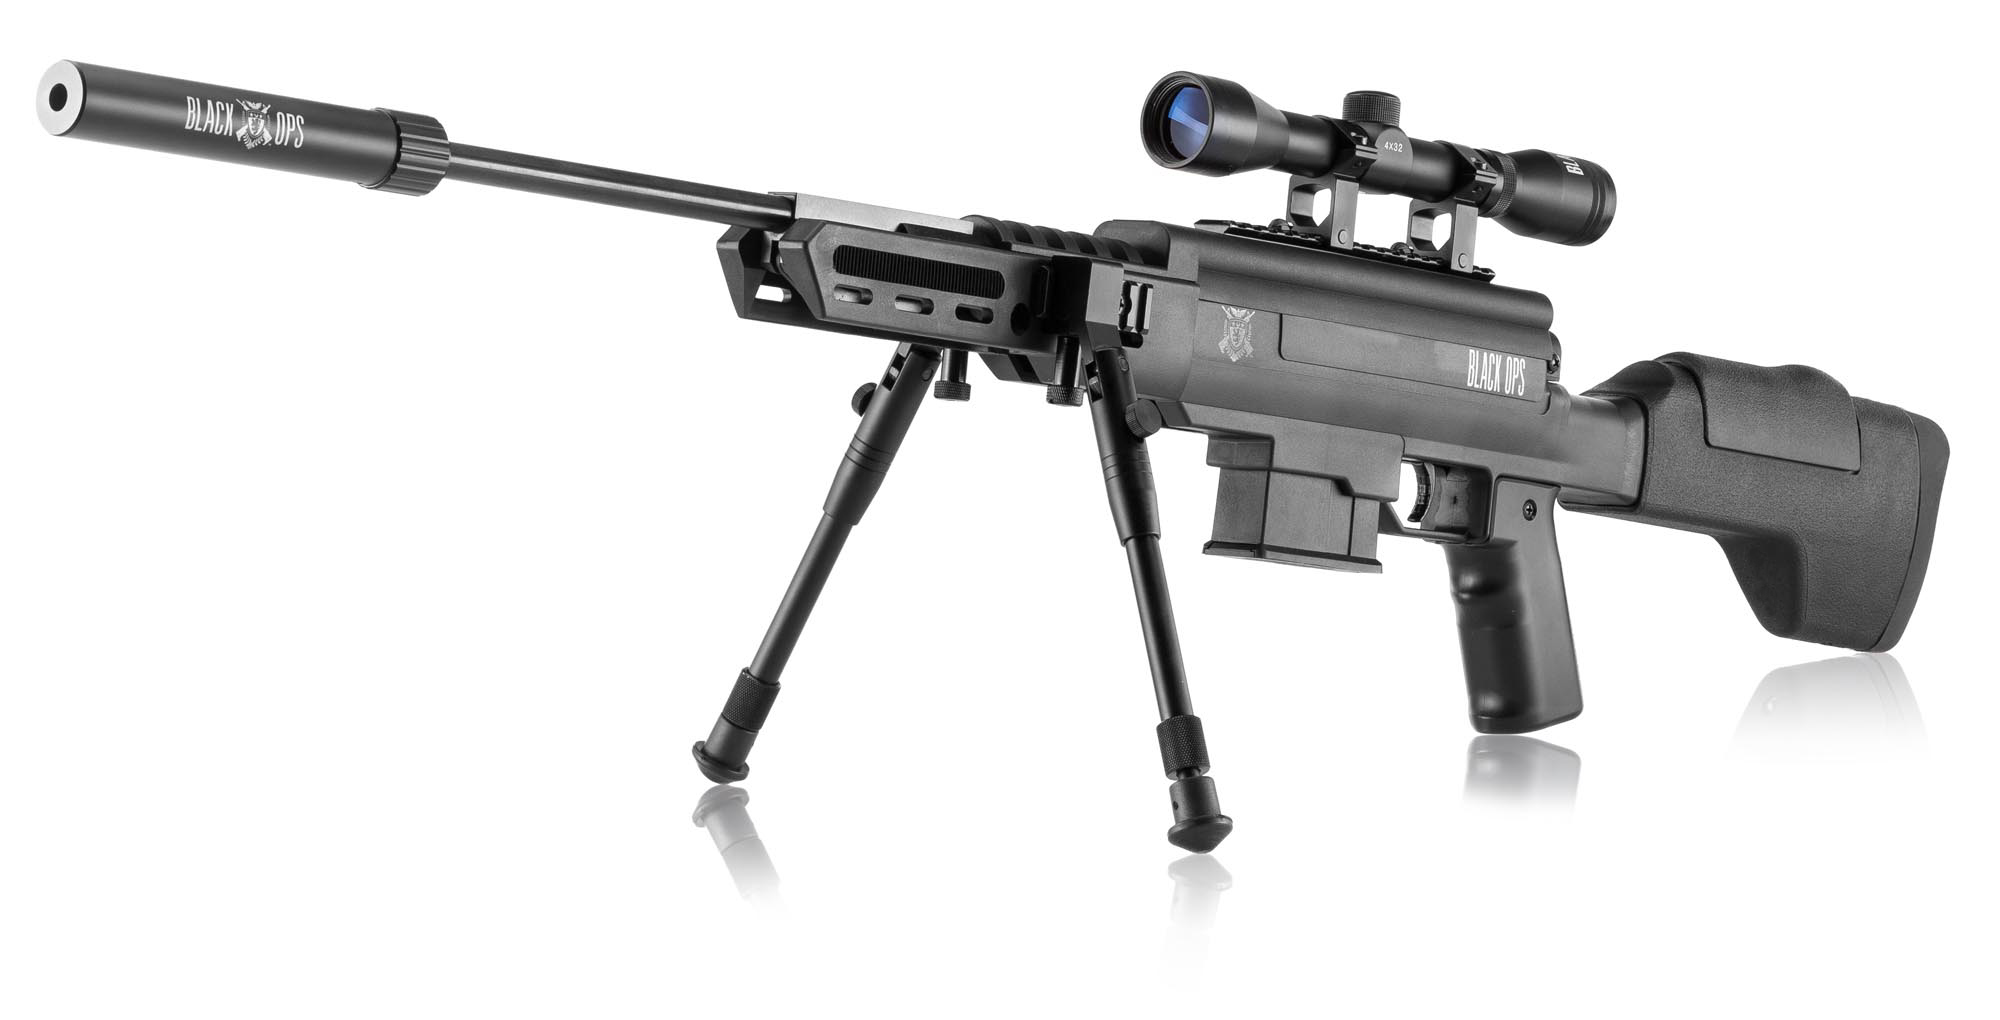 Black Ops Sniper rifle full power (19,9 joule) - break Barrel - Cal 4,5mm  pellet